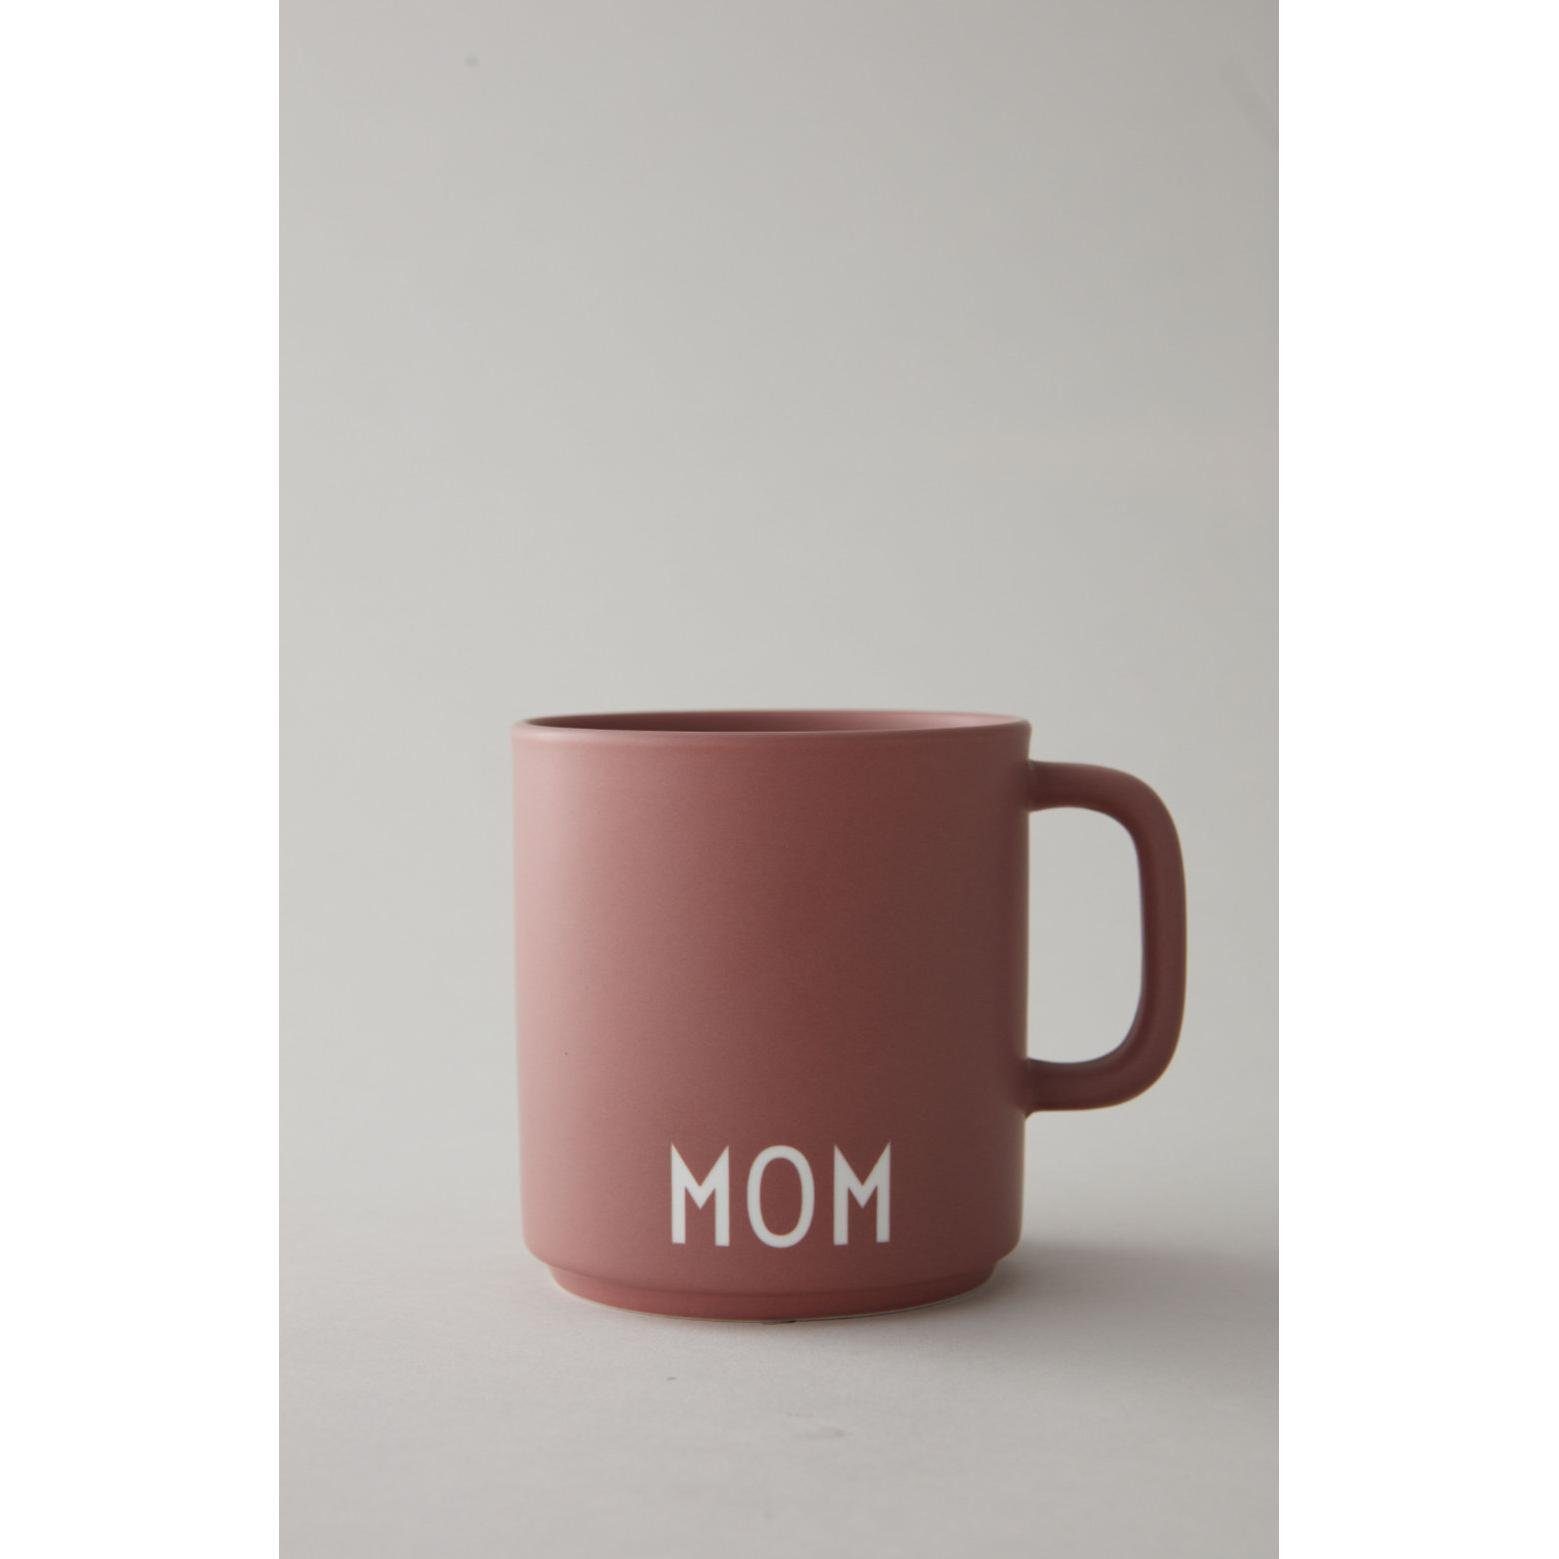 mit Mom Favourite Becher Design Letters Altrosa Henkel Tasse Cup